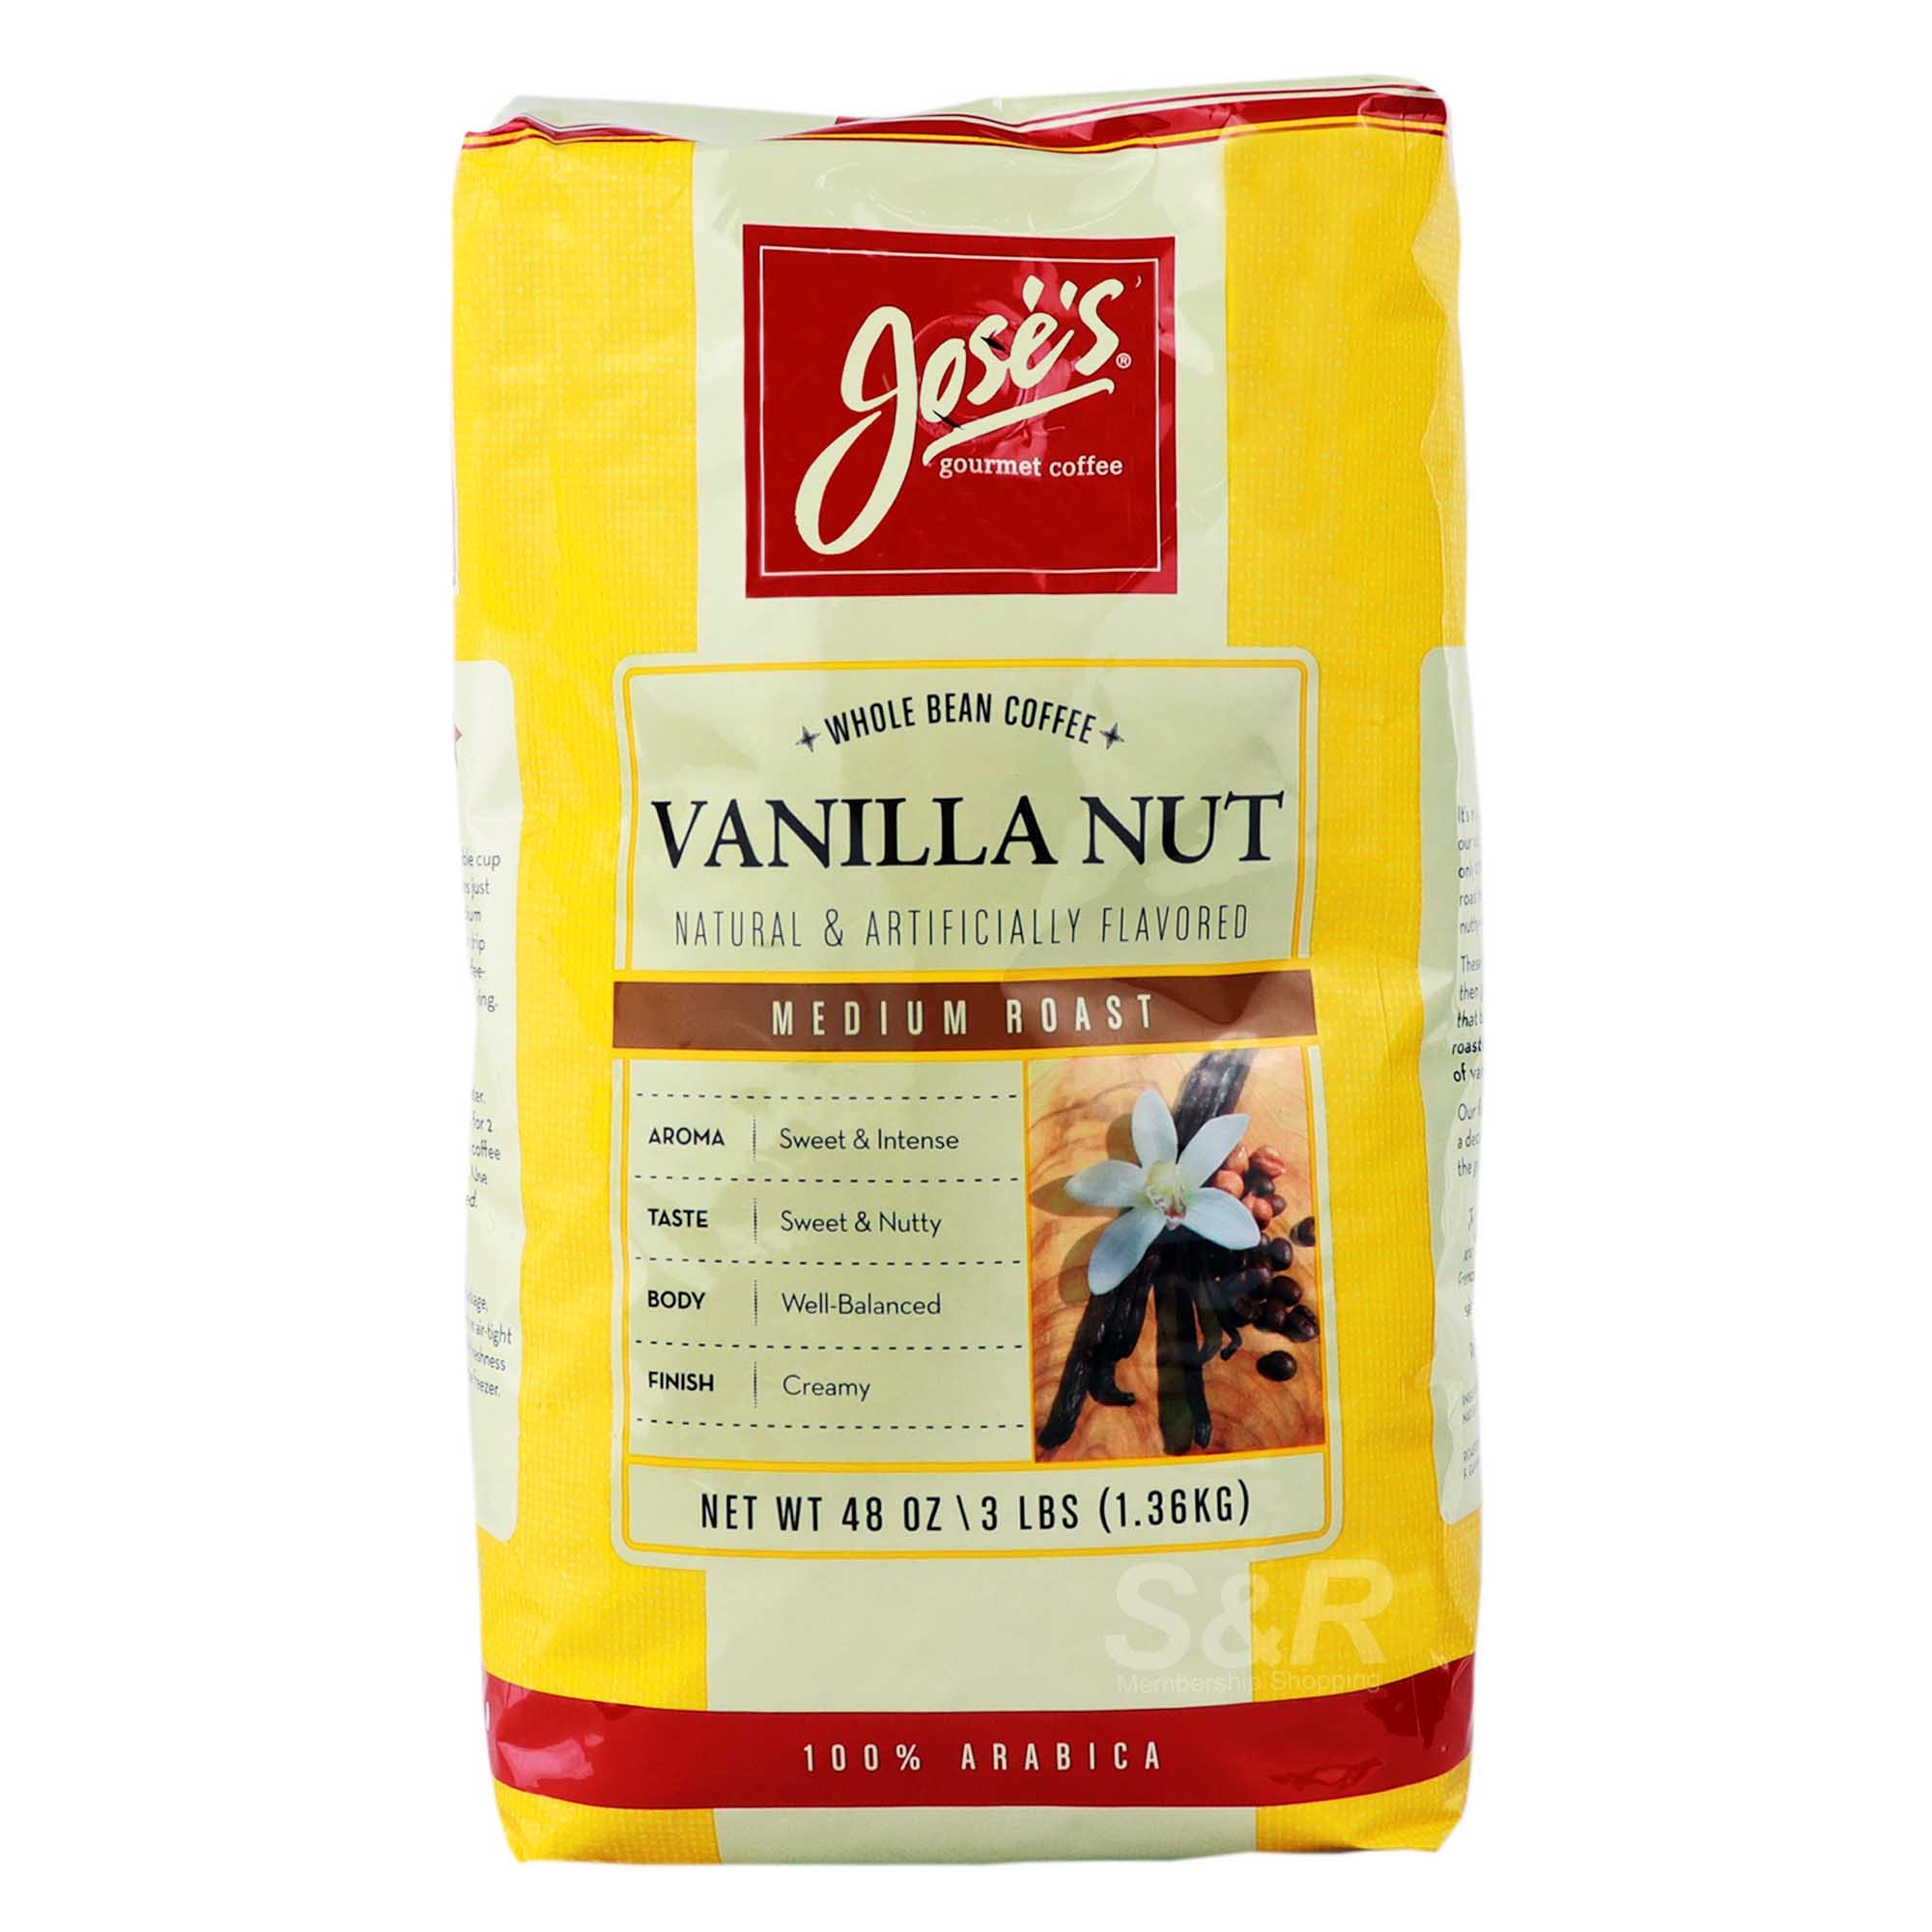 Jose's Gourmet Coffee Whole Bean Coffee Vanilla Nut Medium Roast 1.36kg